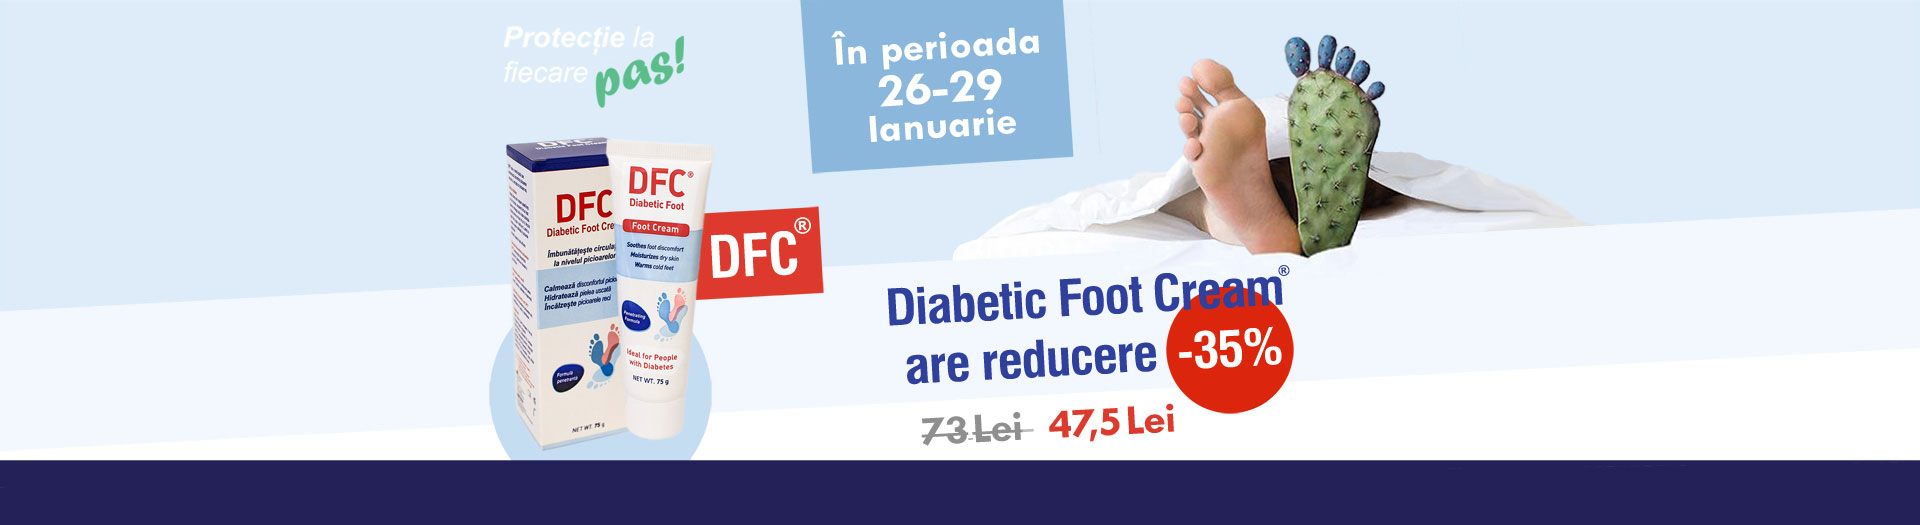 Diabetic Foot Cream banner home